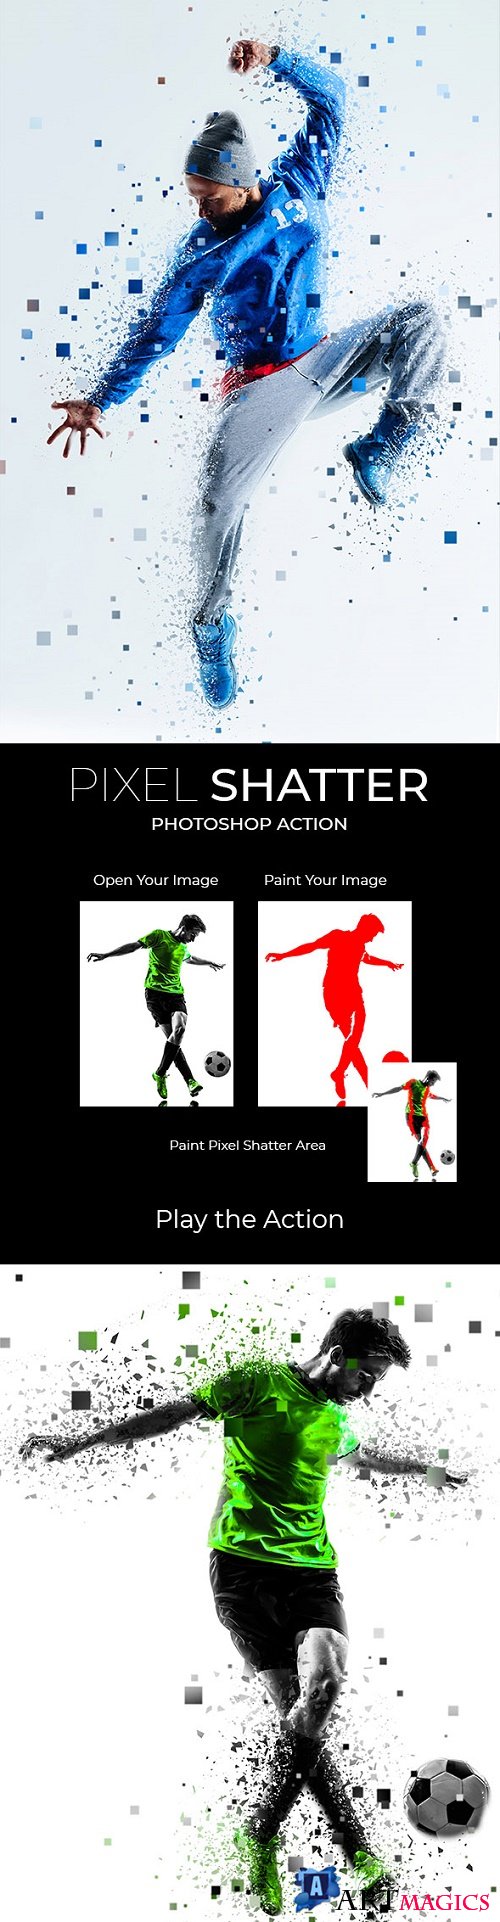 Pixel Shatter Photoshop Action 21883196